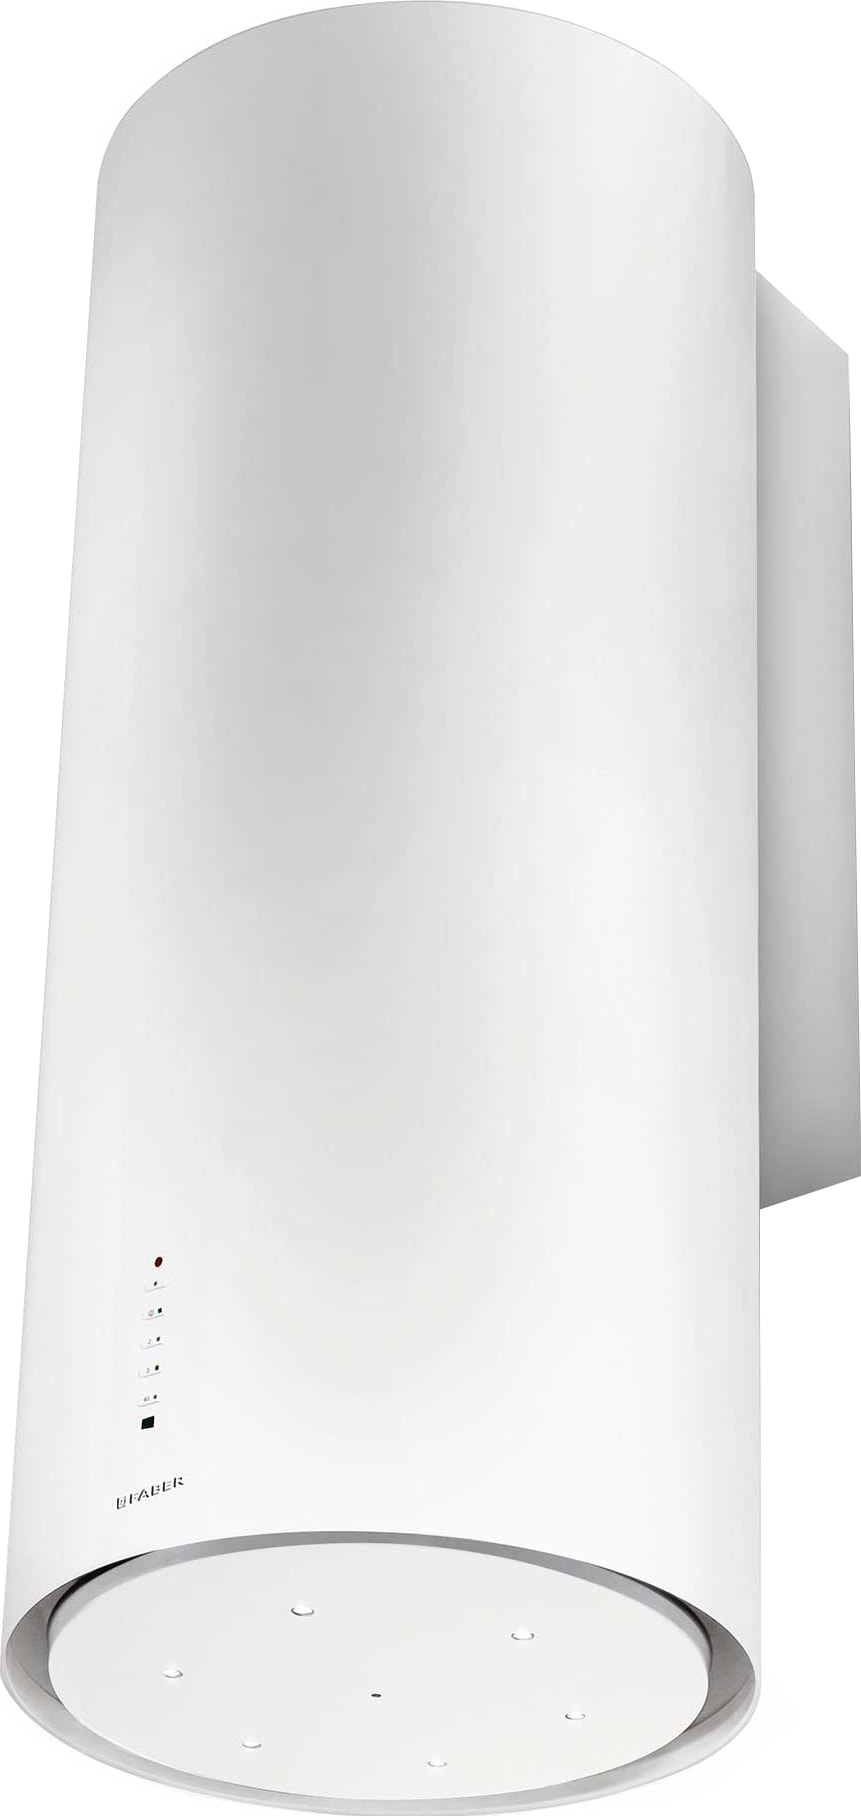 Eico Faber Cylindra P W Plus ventilator 5633 - Ventilator - Elkjøp